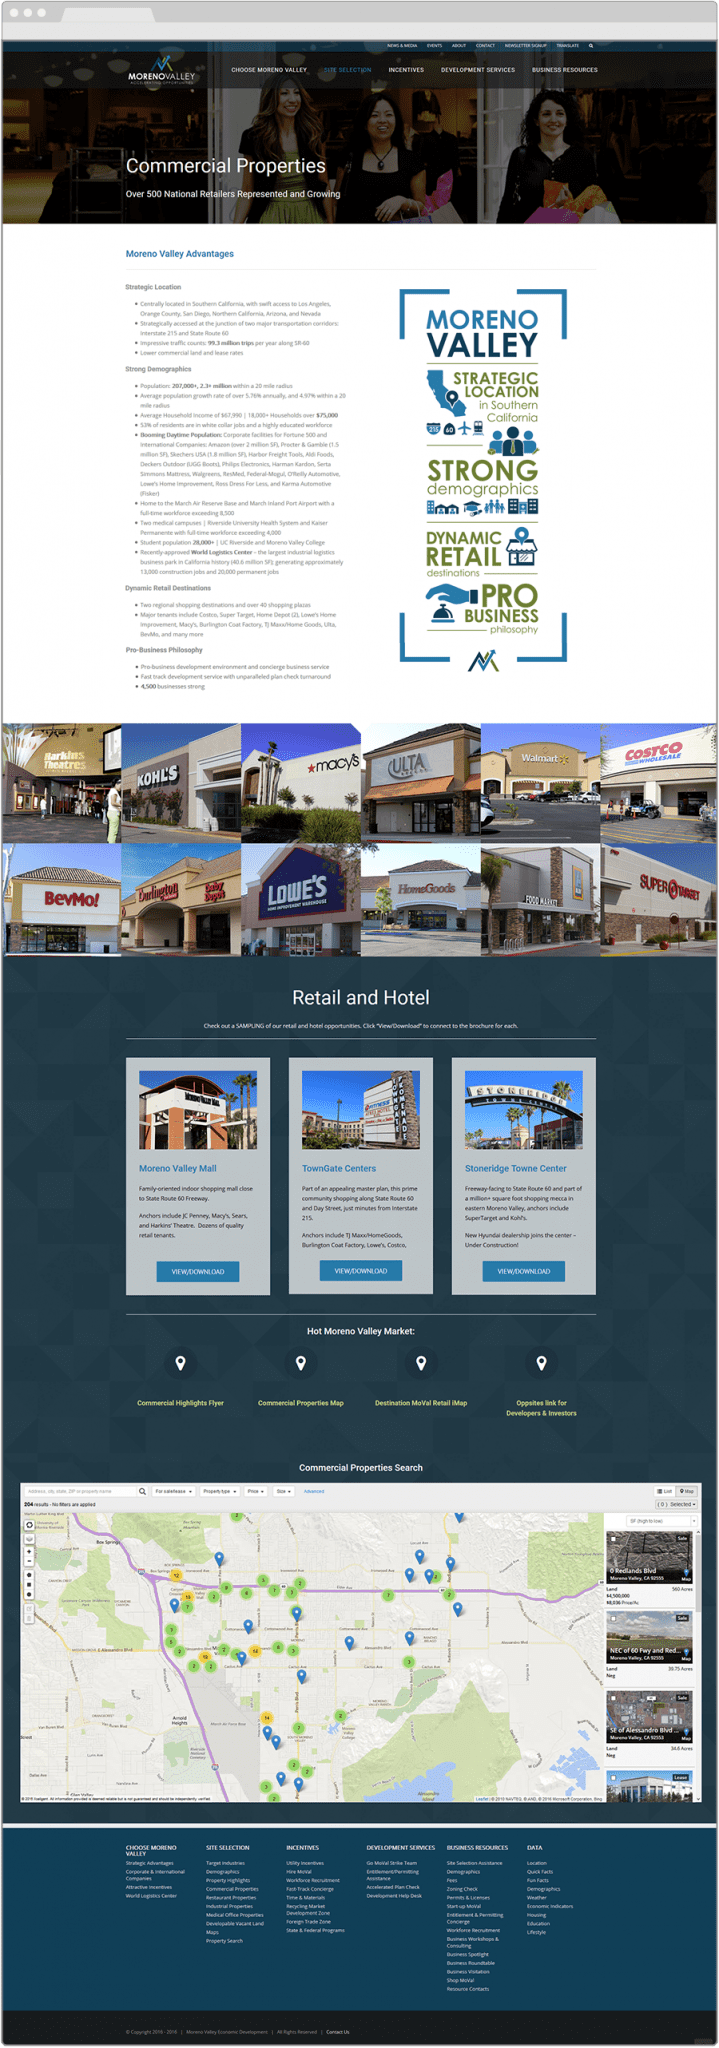 Moreno Valley Website Design and Development